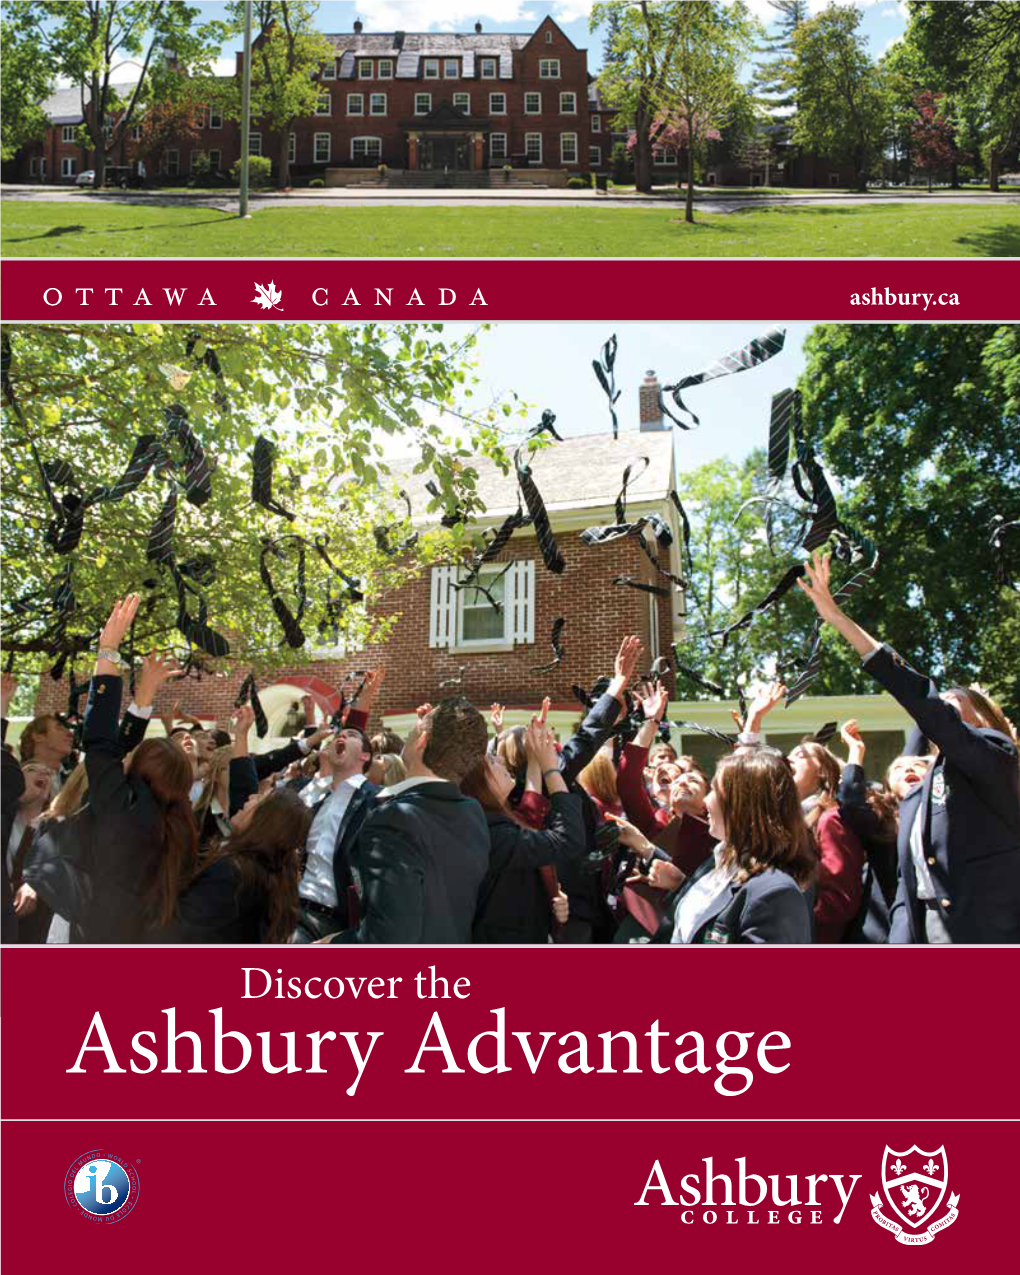 Ashbury Advantage Welcome to Ashbury College